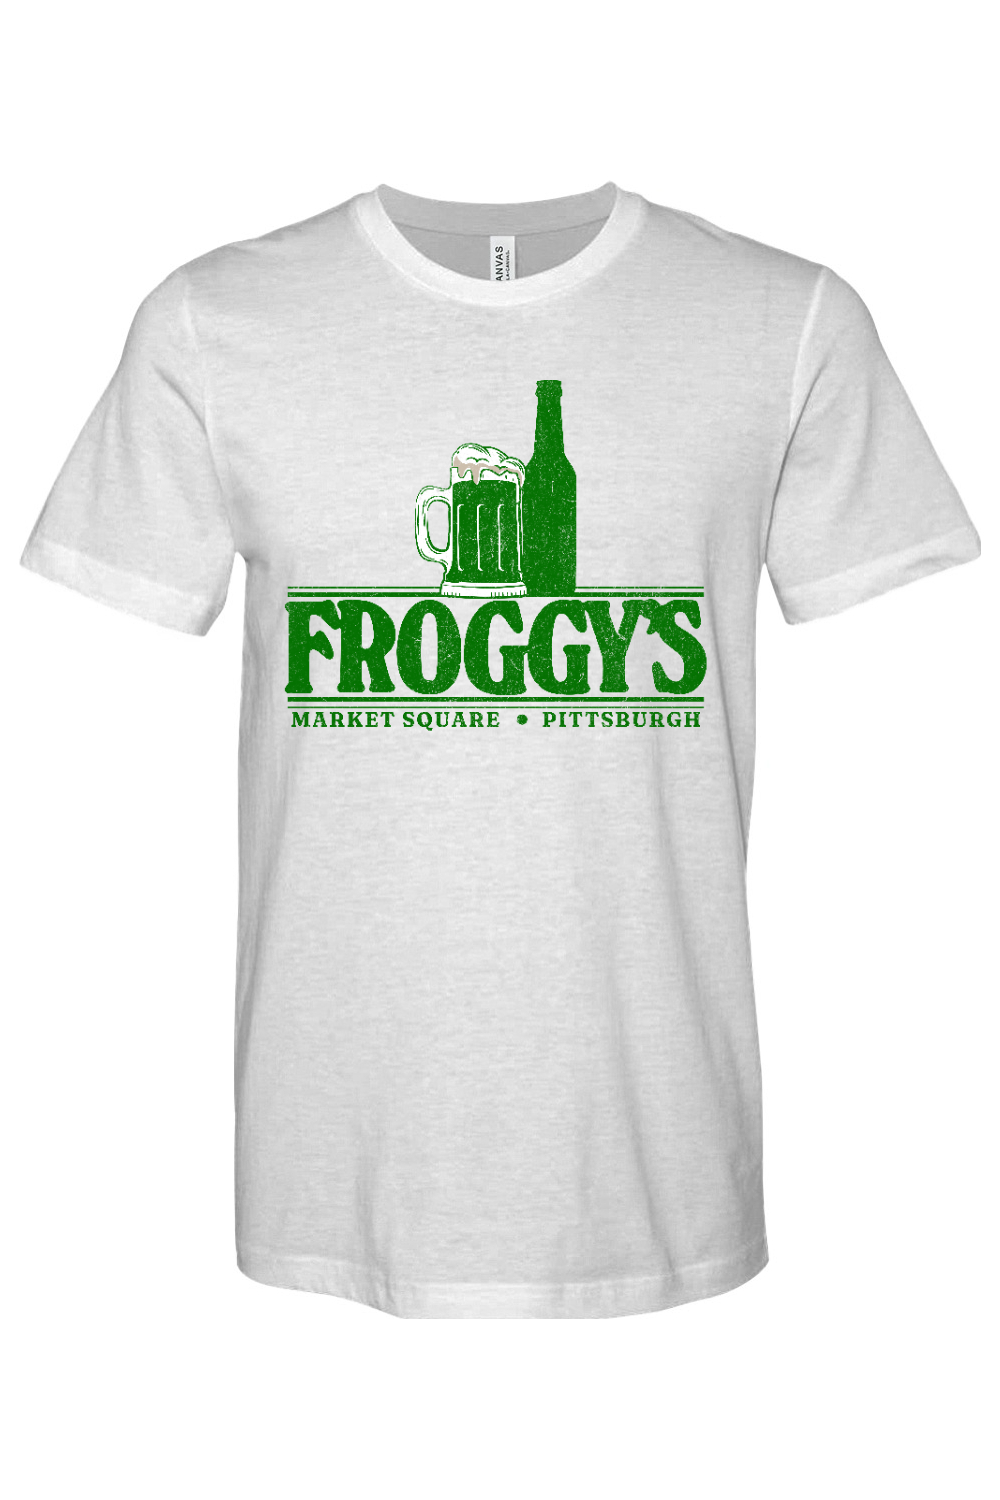 Froggy's Market Square - Pittsburgh - Yinzylvania